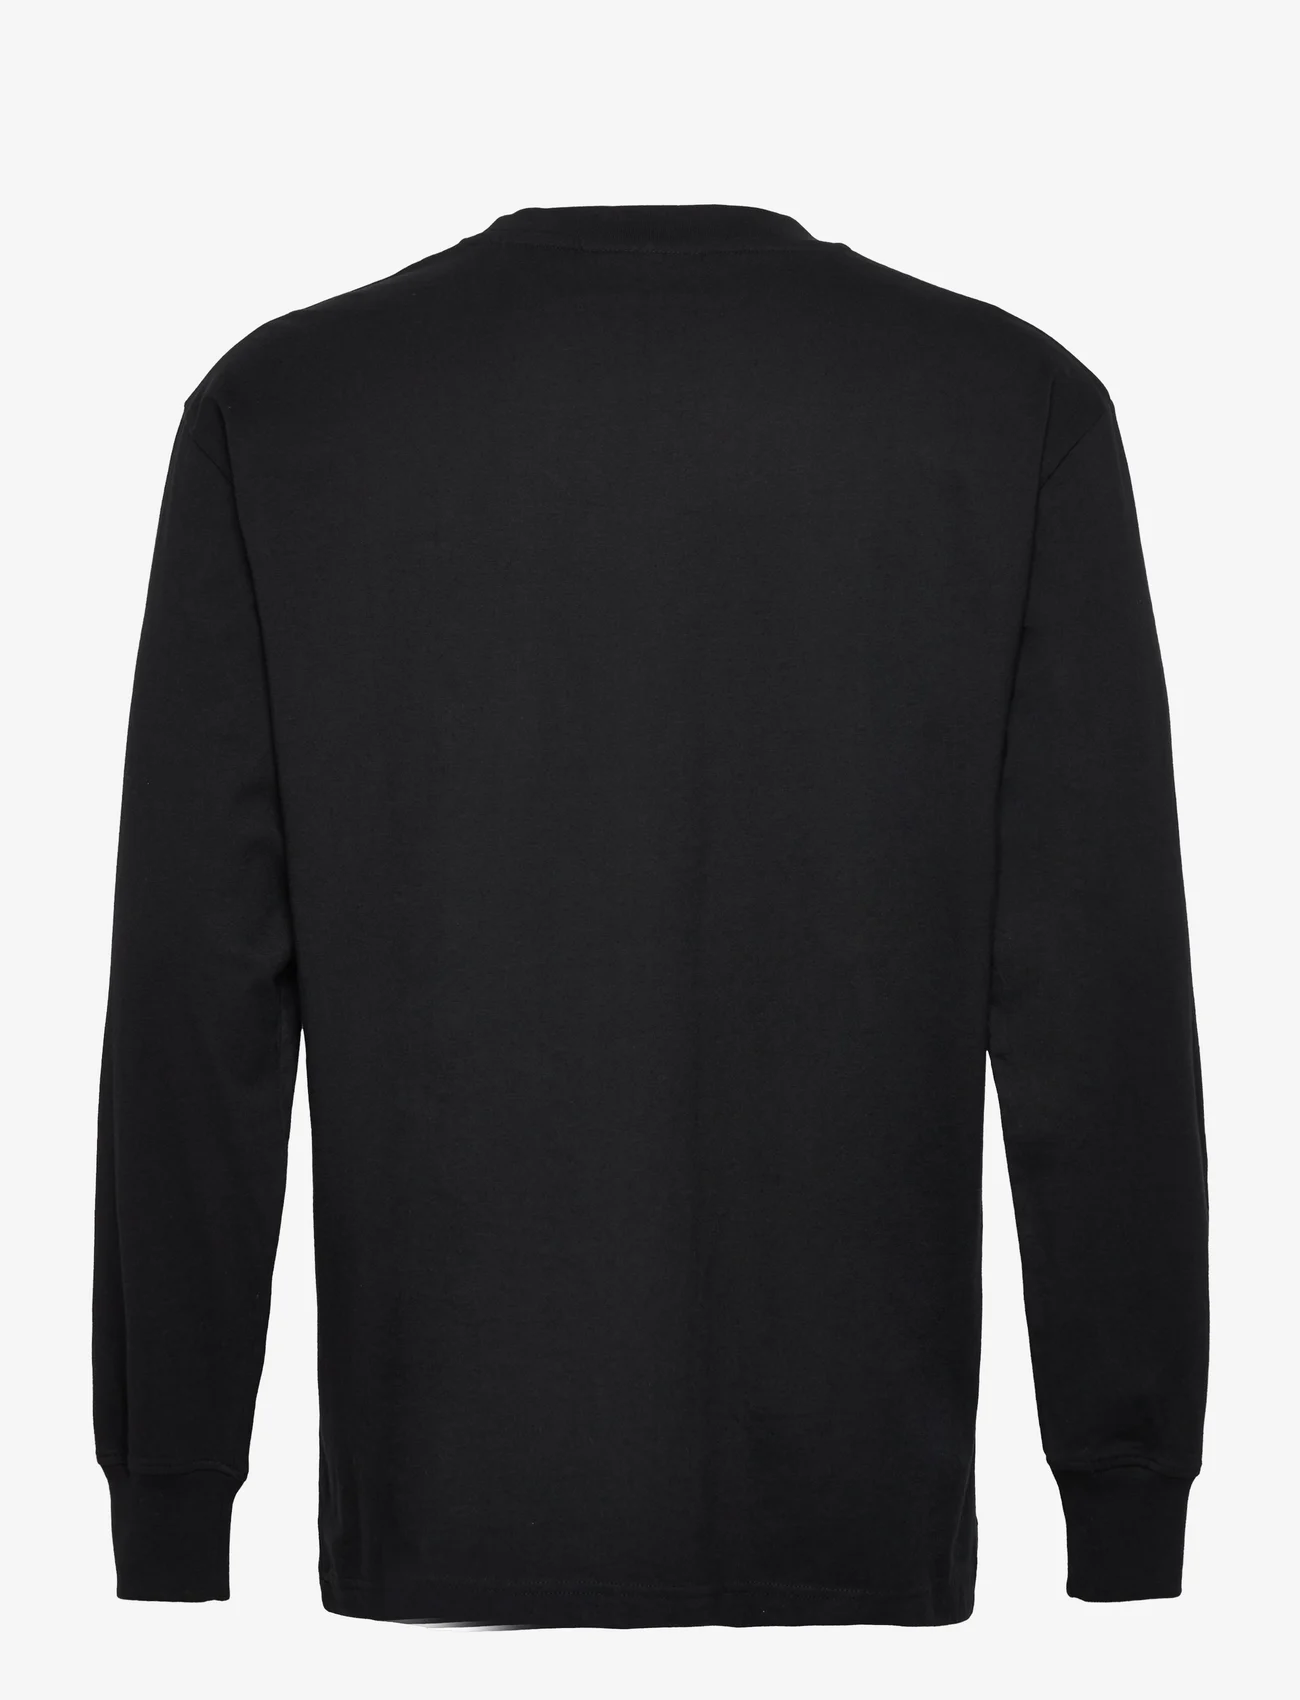 HAN Kjøbenhavn - Boxy Tee Long Sleeve - marškinėliai ilgomis rankovėmis - black - 1